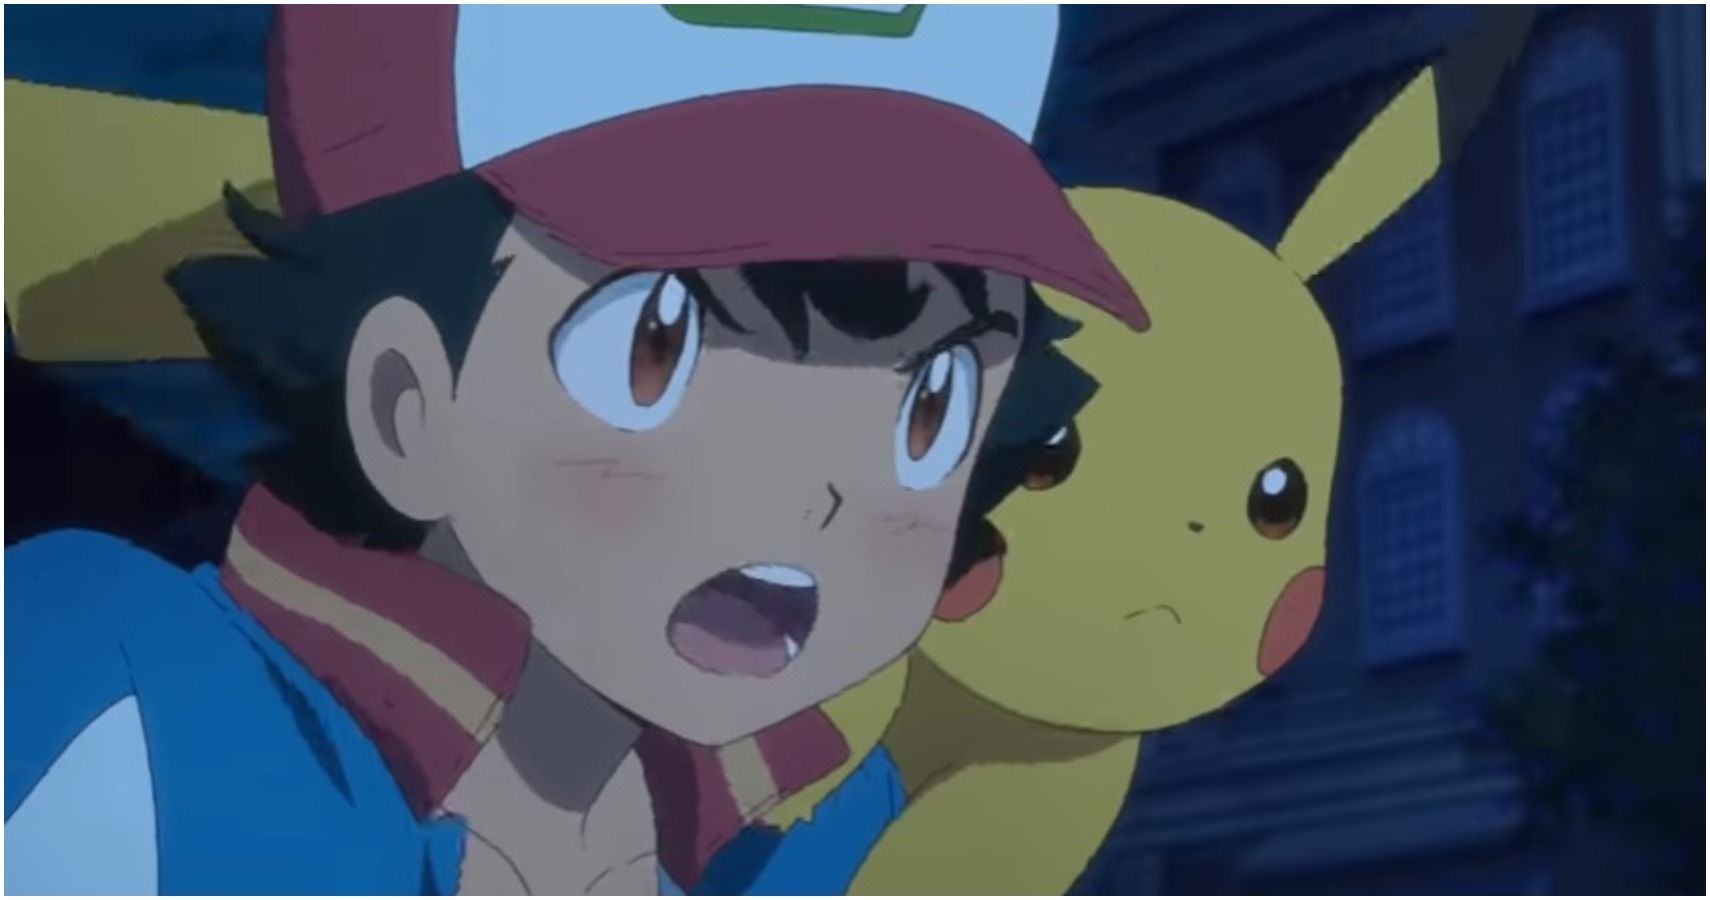 TwentyFirst Pokémon Movie Sees The Return Of A Gold & Silver Legendary